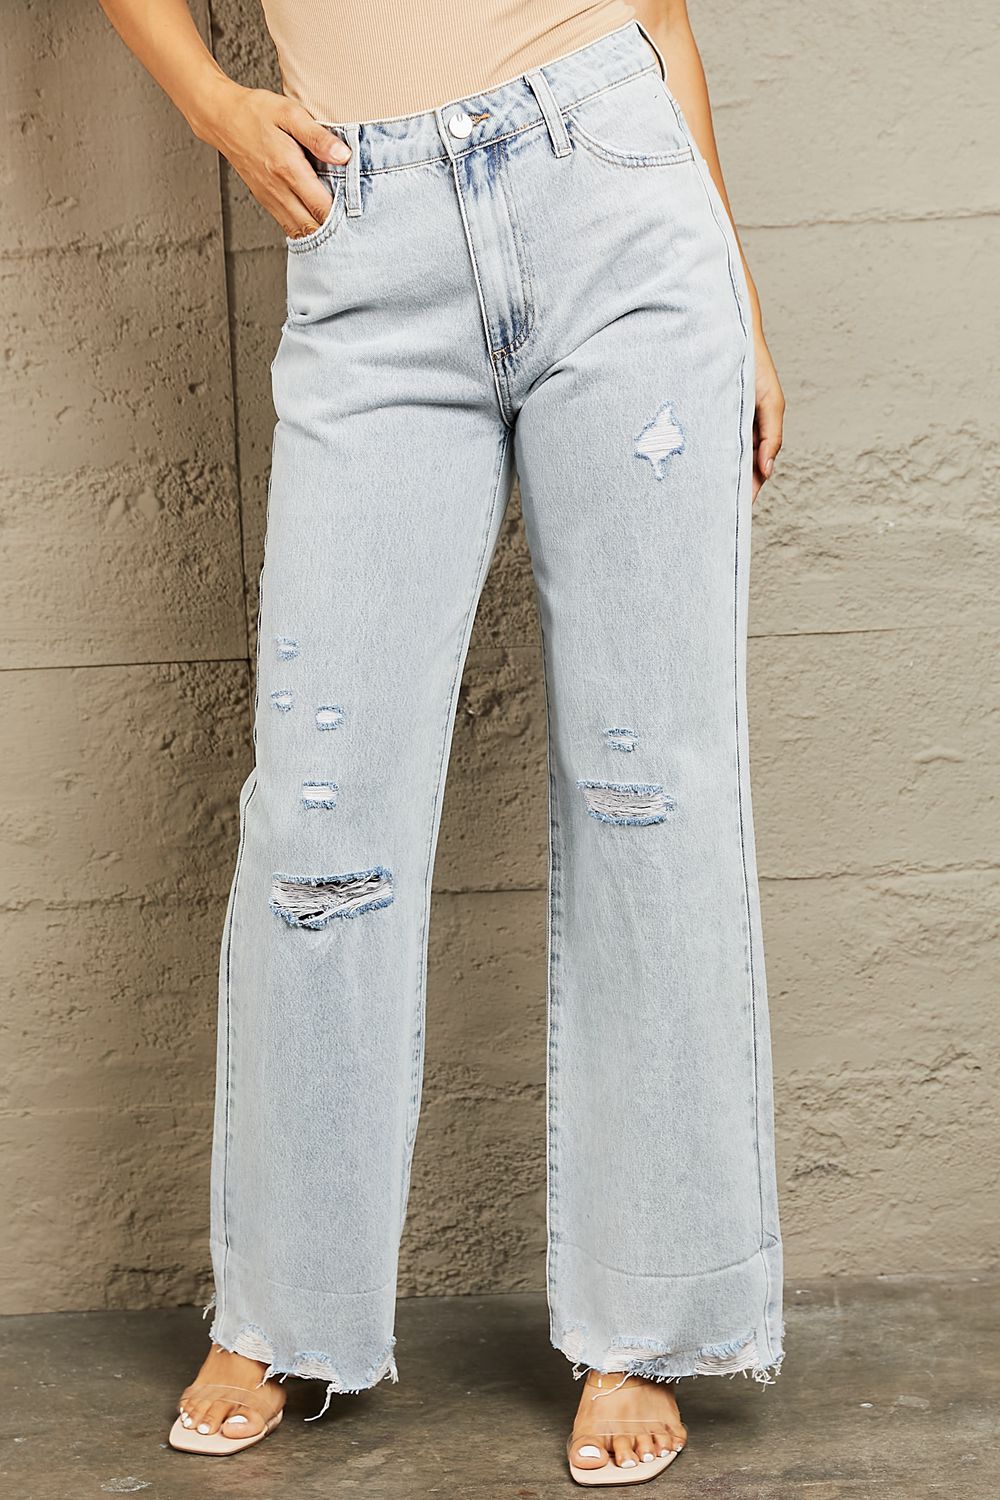 Jacqueline - BAYEAS High Waist Flare Jeans